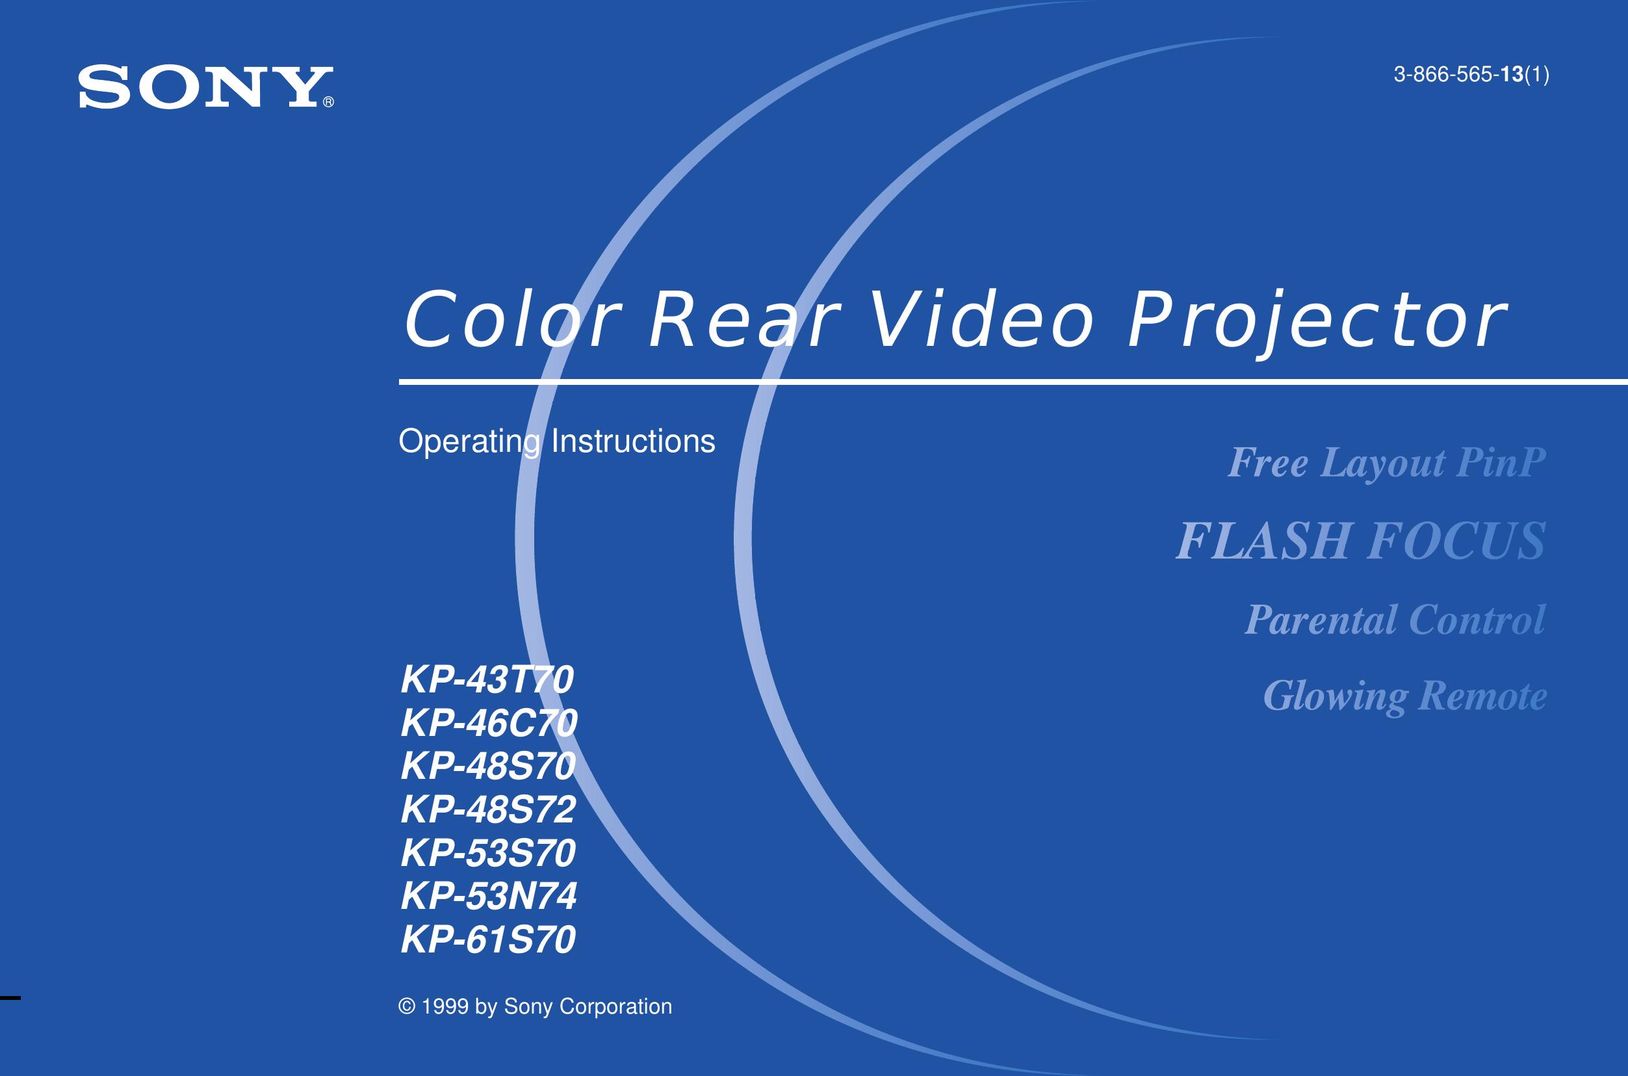 Sony KP-53N74 Projector User Manual